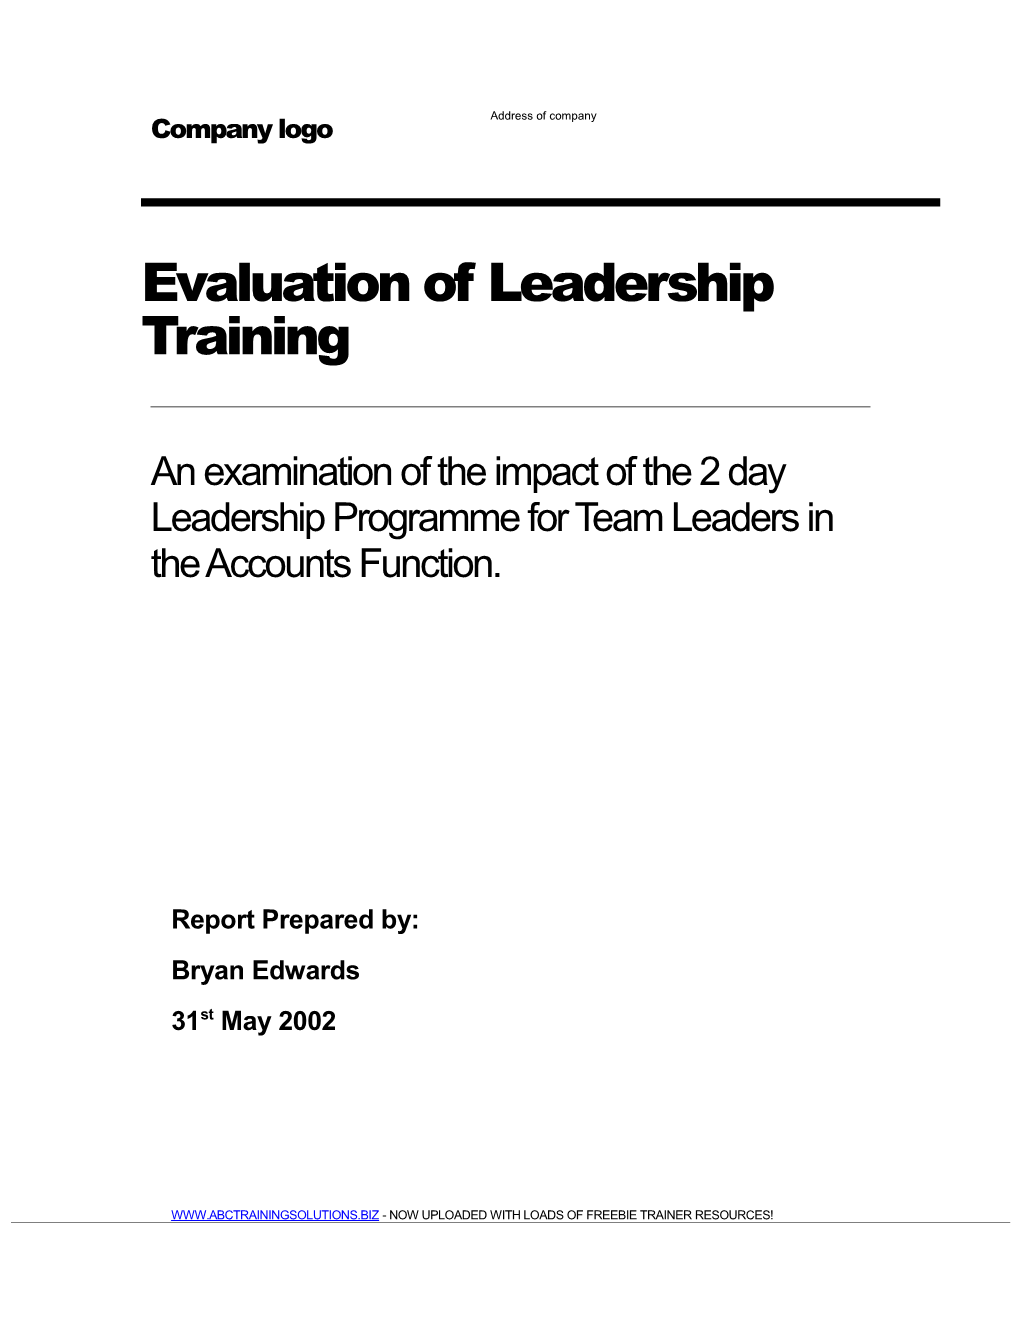 Evaluation of Leadership Training